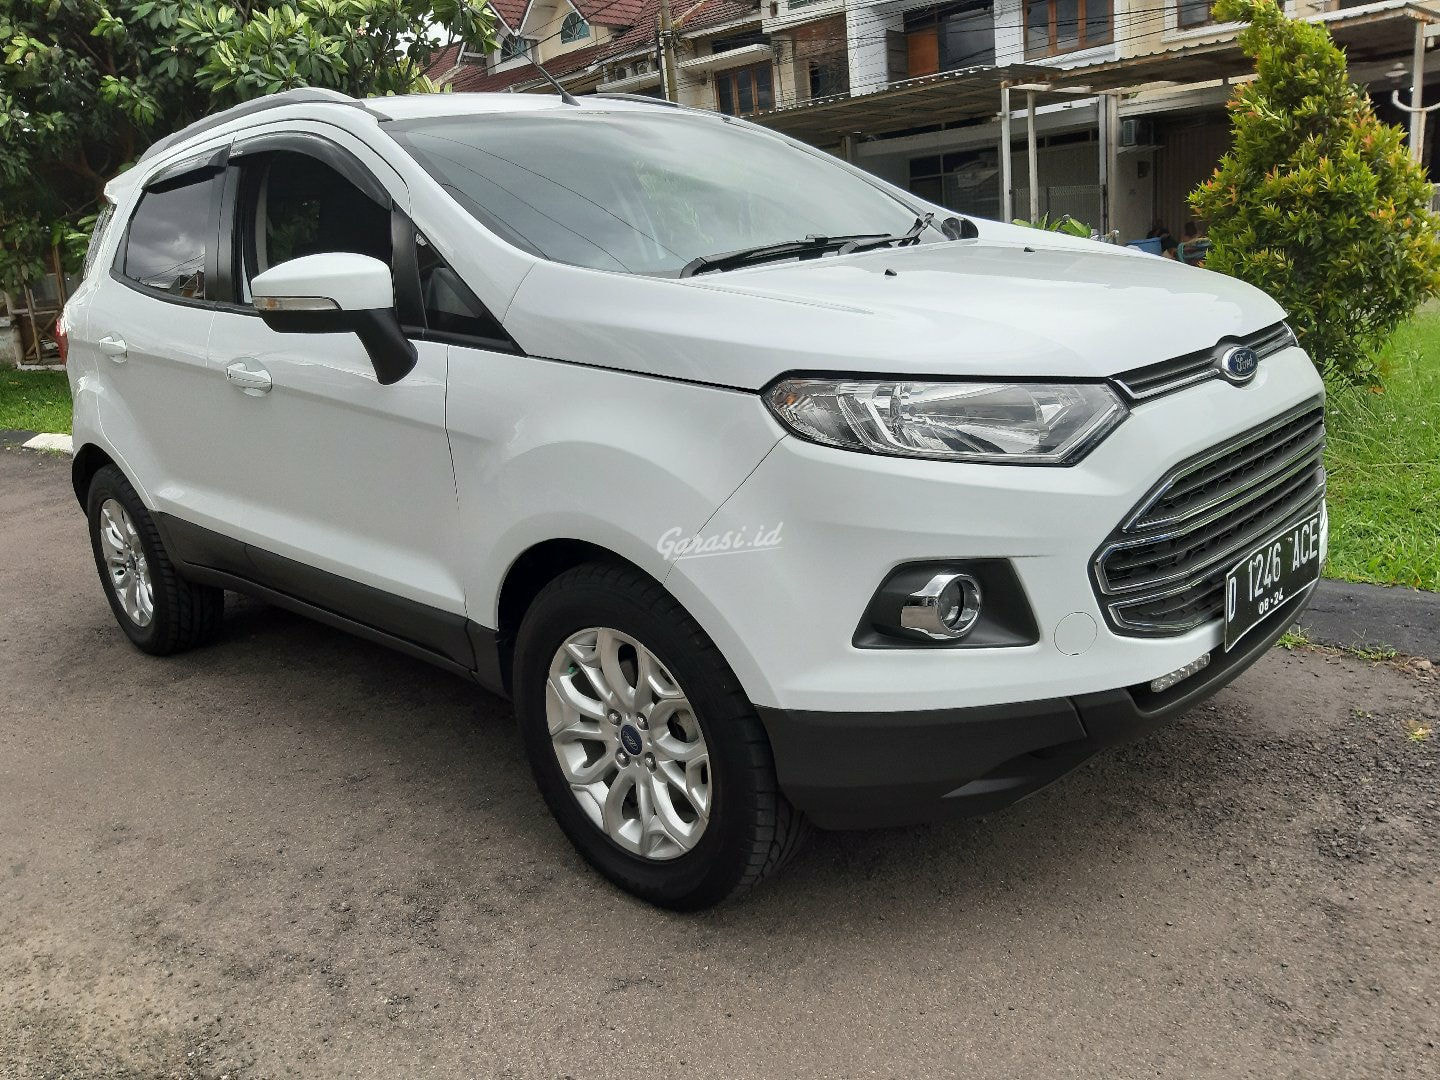  Jual  Mobil Bekas 2014 Ford  Ecosport  titanium Kota Bandung 